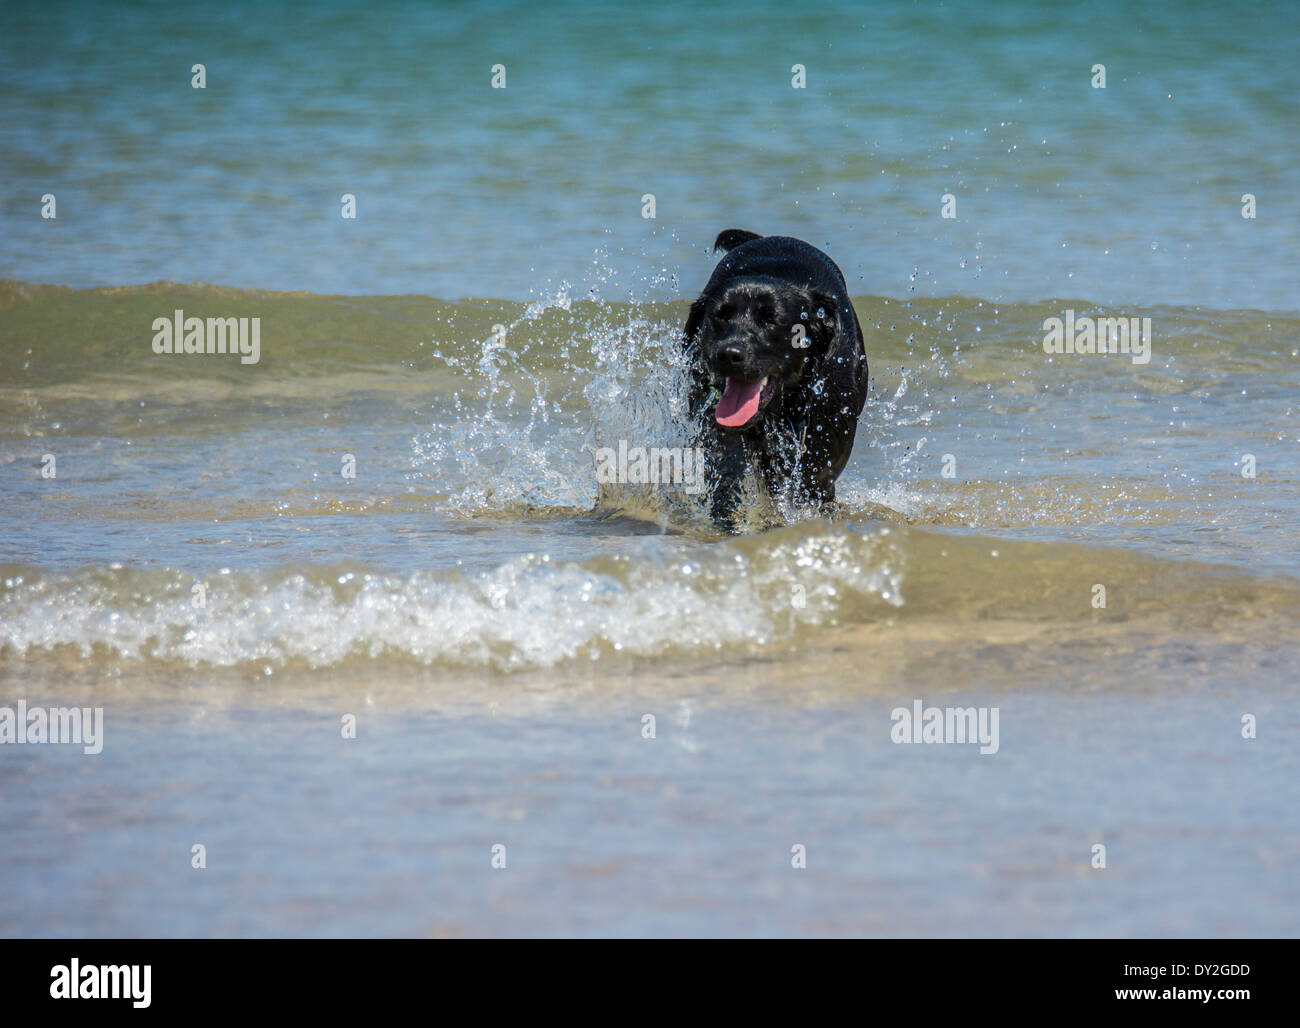 Black Labrador having fun in the sea Stock Photo